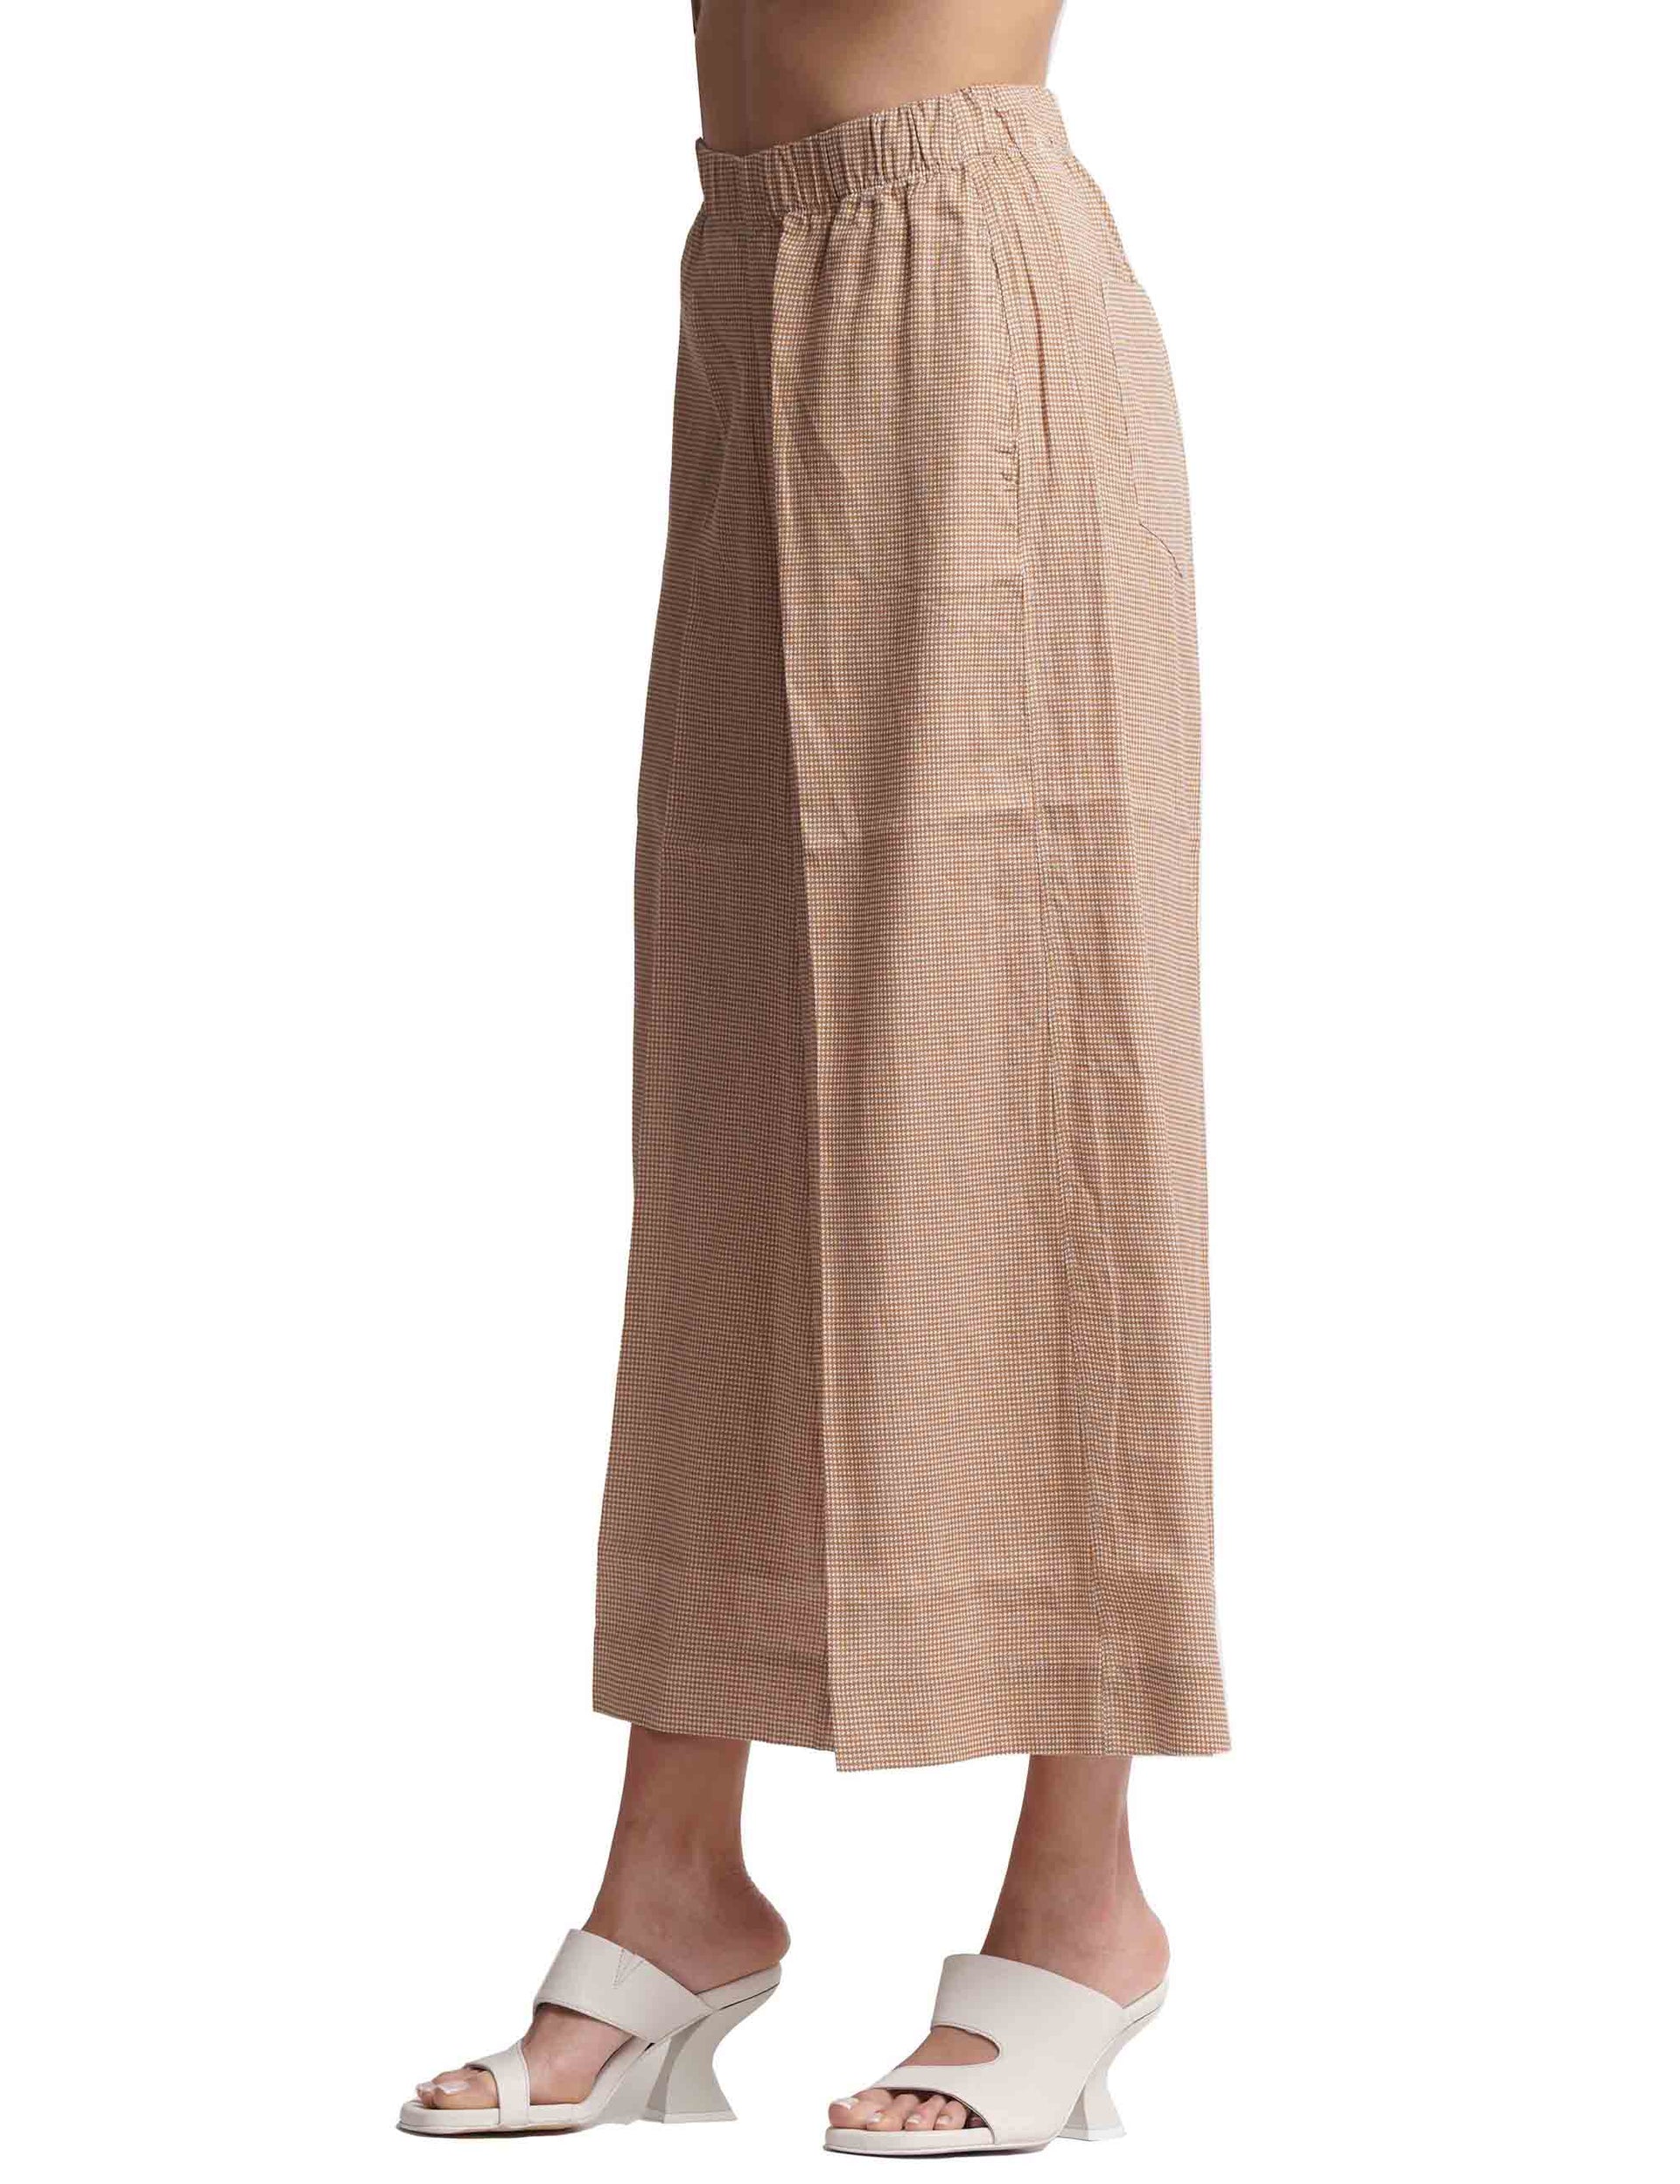 Women's wide-leg camel pure linen trousers with elastic waist